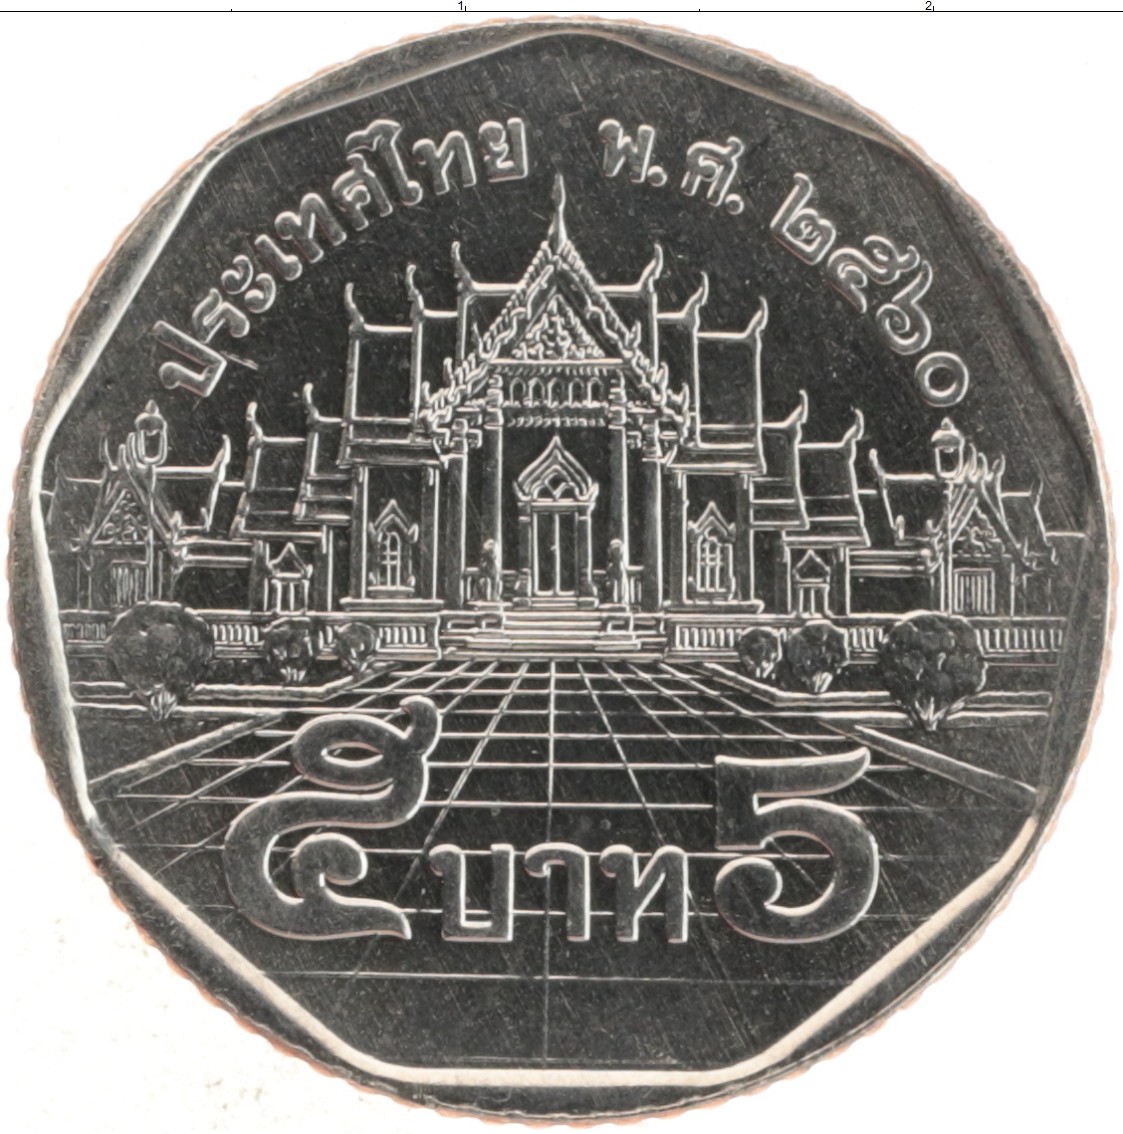 5 батов в рублях. Монеты Тайланда 5 бат. Таиландская монета 5 бат. Тацландские монеты 5 бат. Таиланд 5 бат 2007.